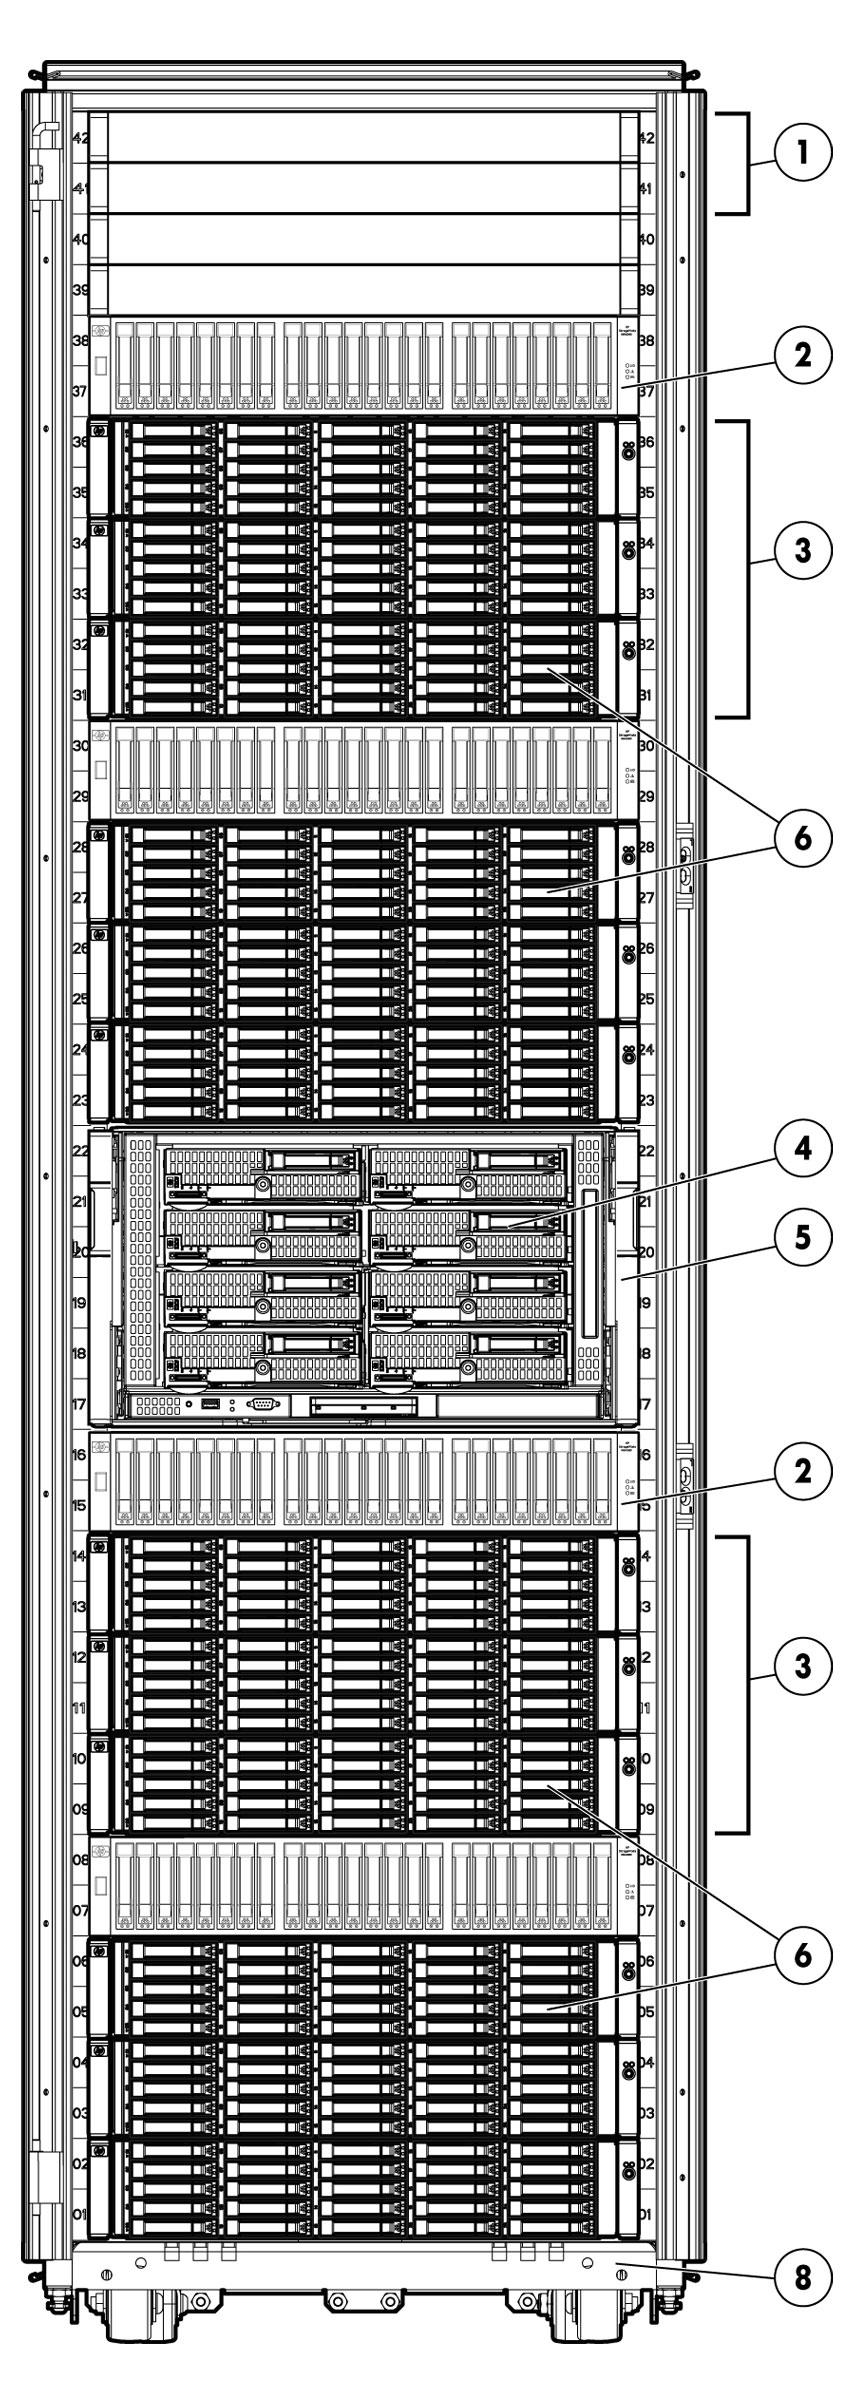 HP D2700 drive shelves (6) Total (198) 146GB 15K SFF disks, 29 TB raw capacity HP Virtual Connect Flex-10 modules (2) - not shown 42u rack DA - 14199 Full Configuration - Front View 1.